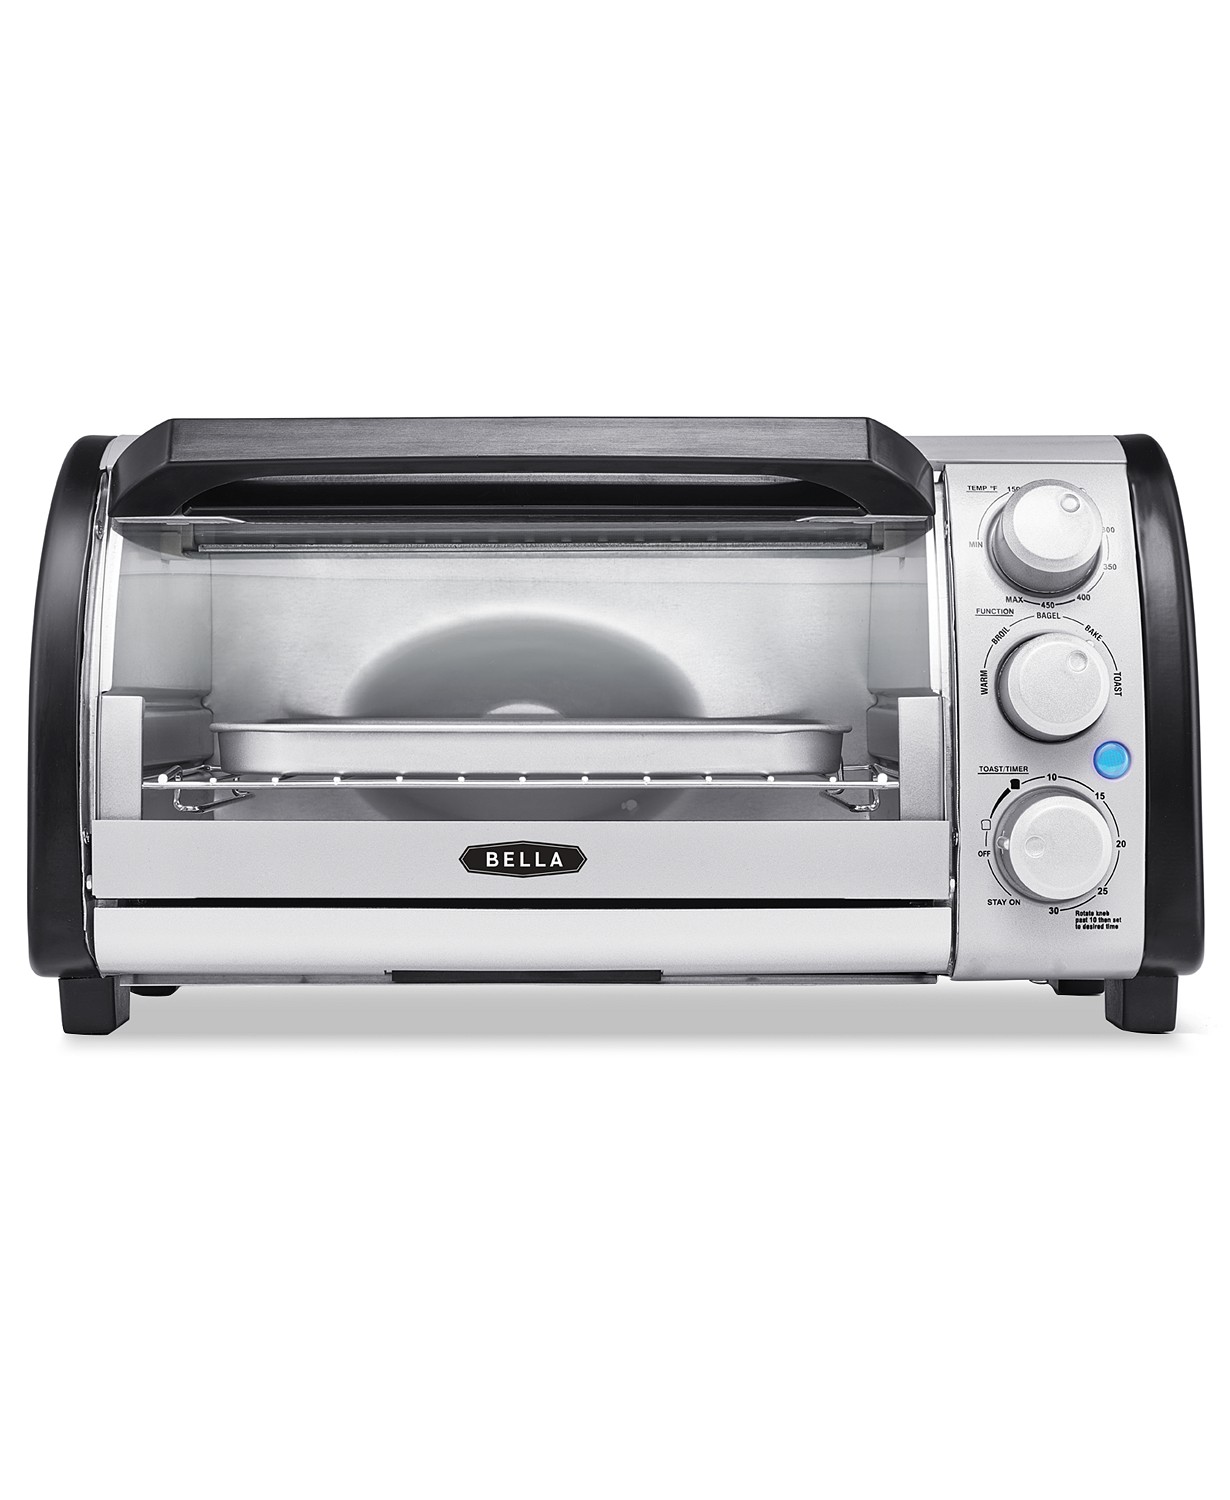 Macys Mail In Rebate Bella Toaster Oven